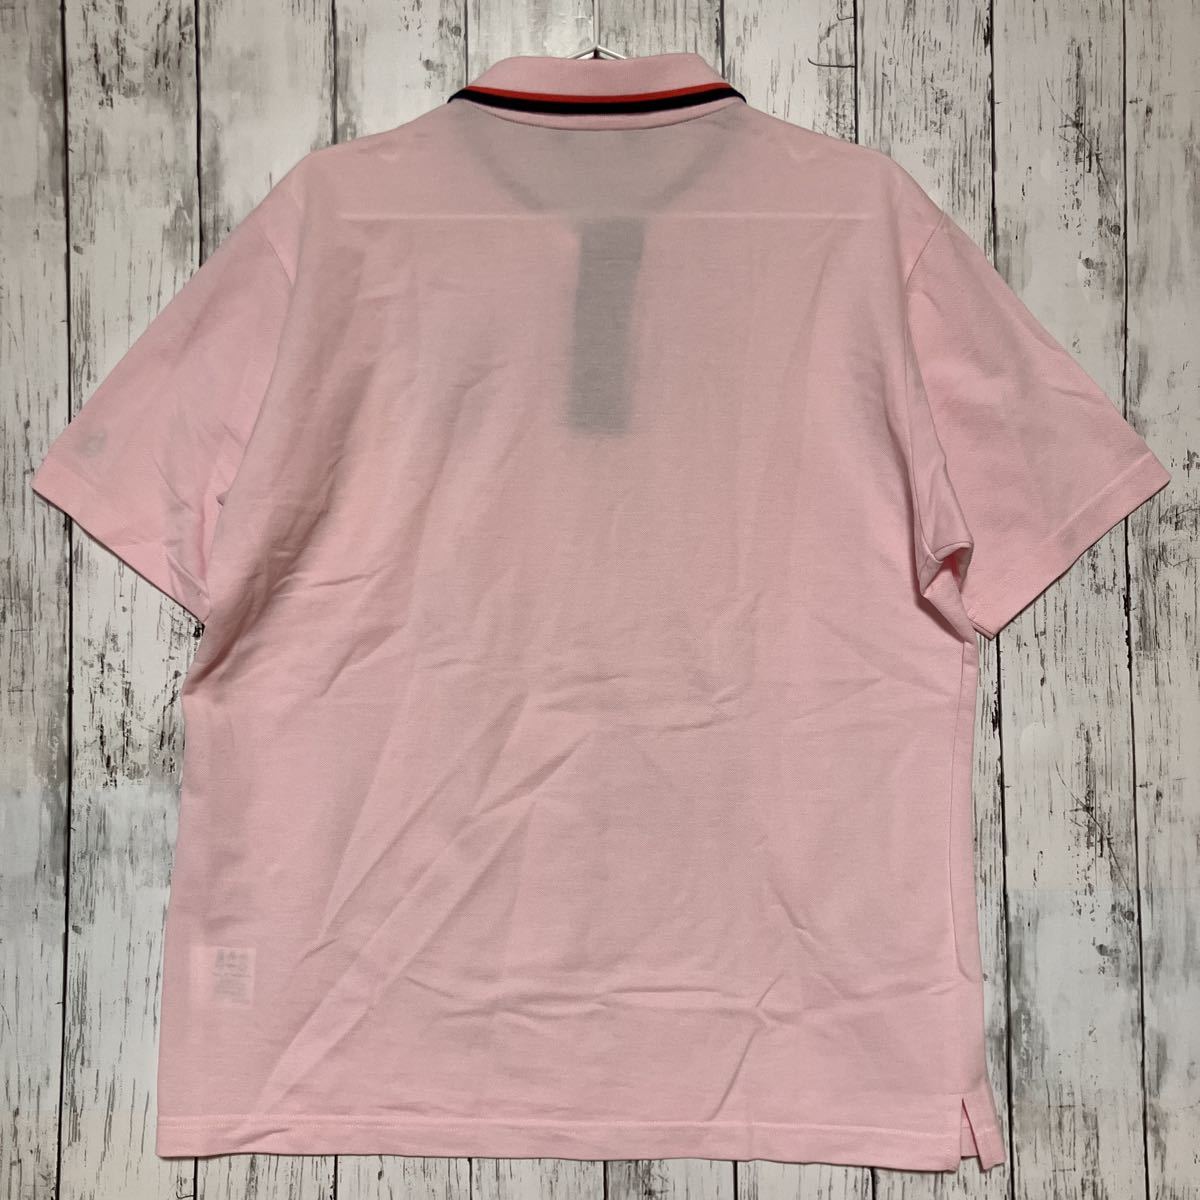 【Munsingwear】マンシングウェア ゴルフ メンズ 半袖ポロシャツ LLサイズ ピンク 送料無料_画像7